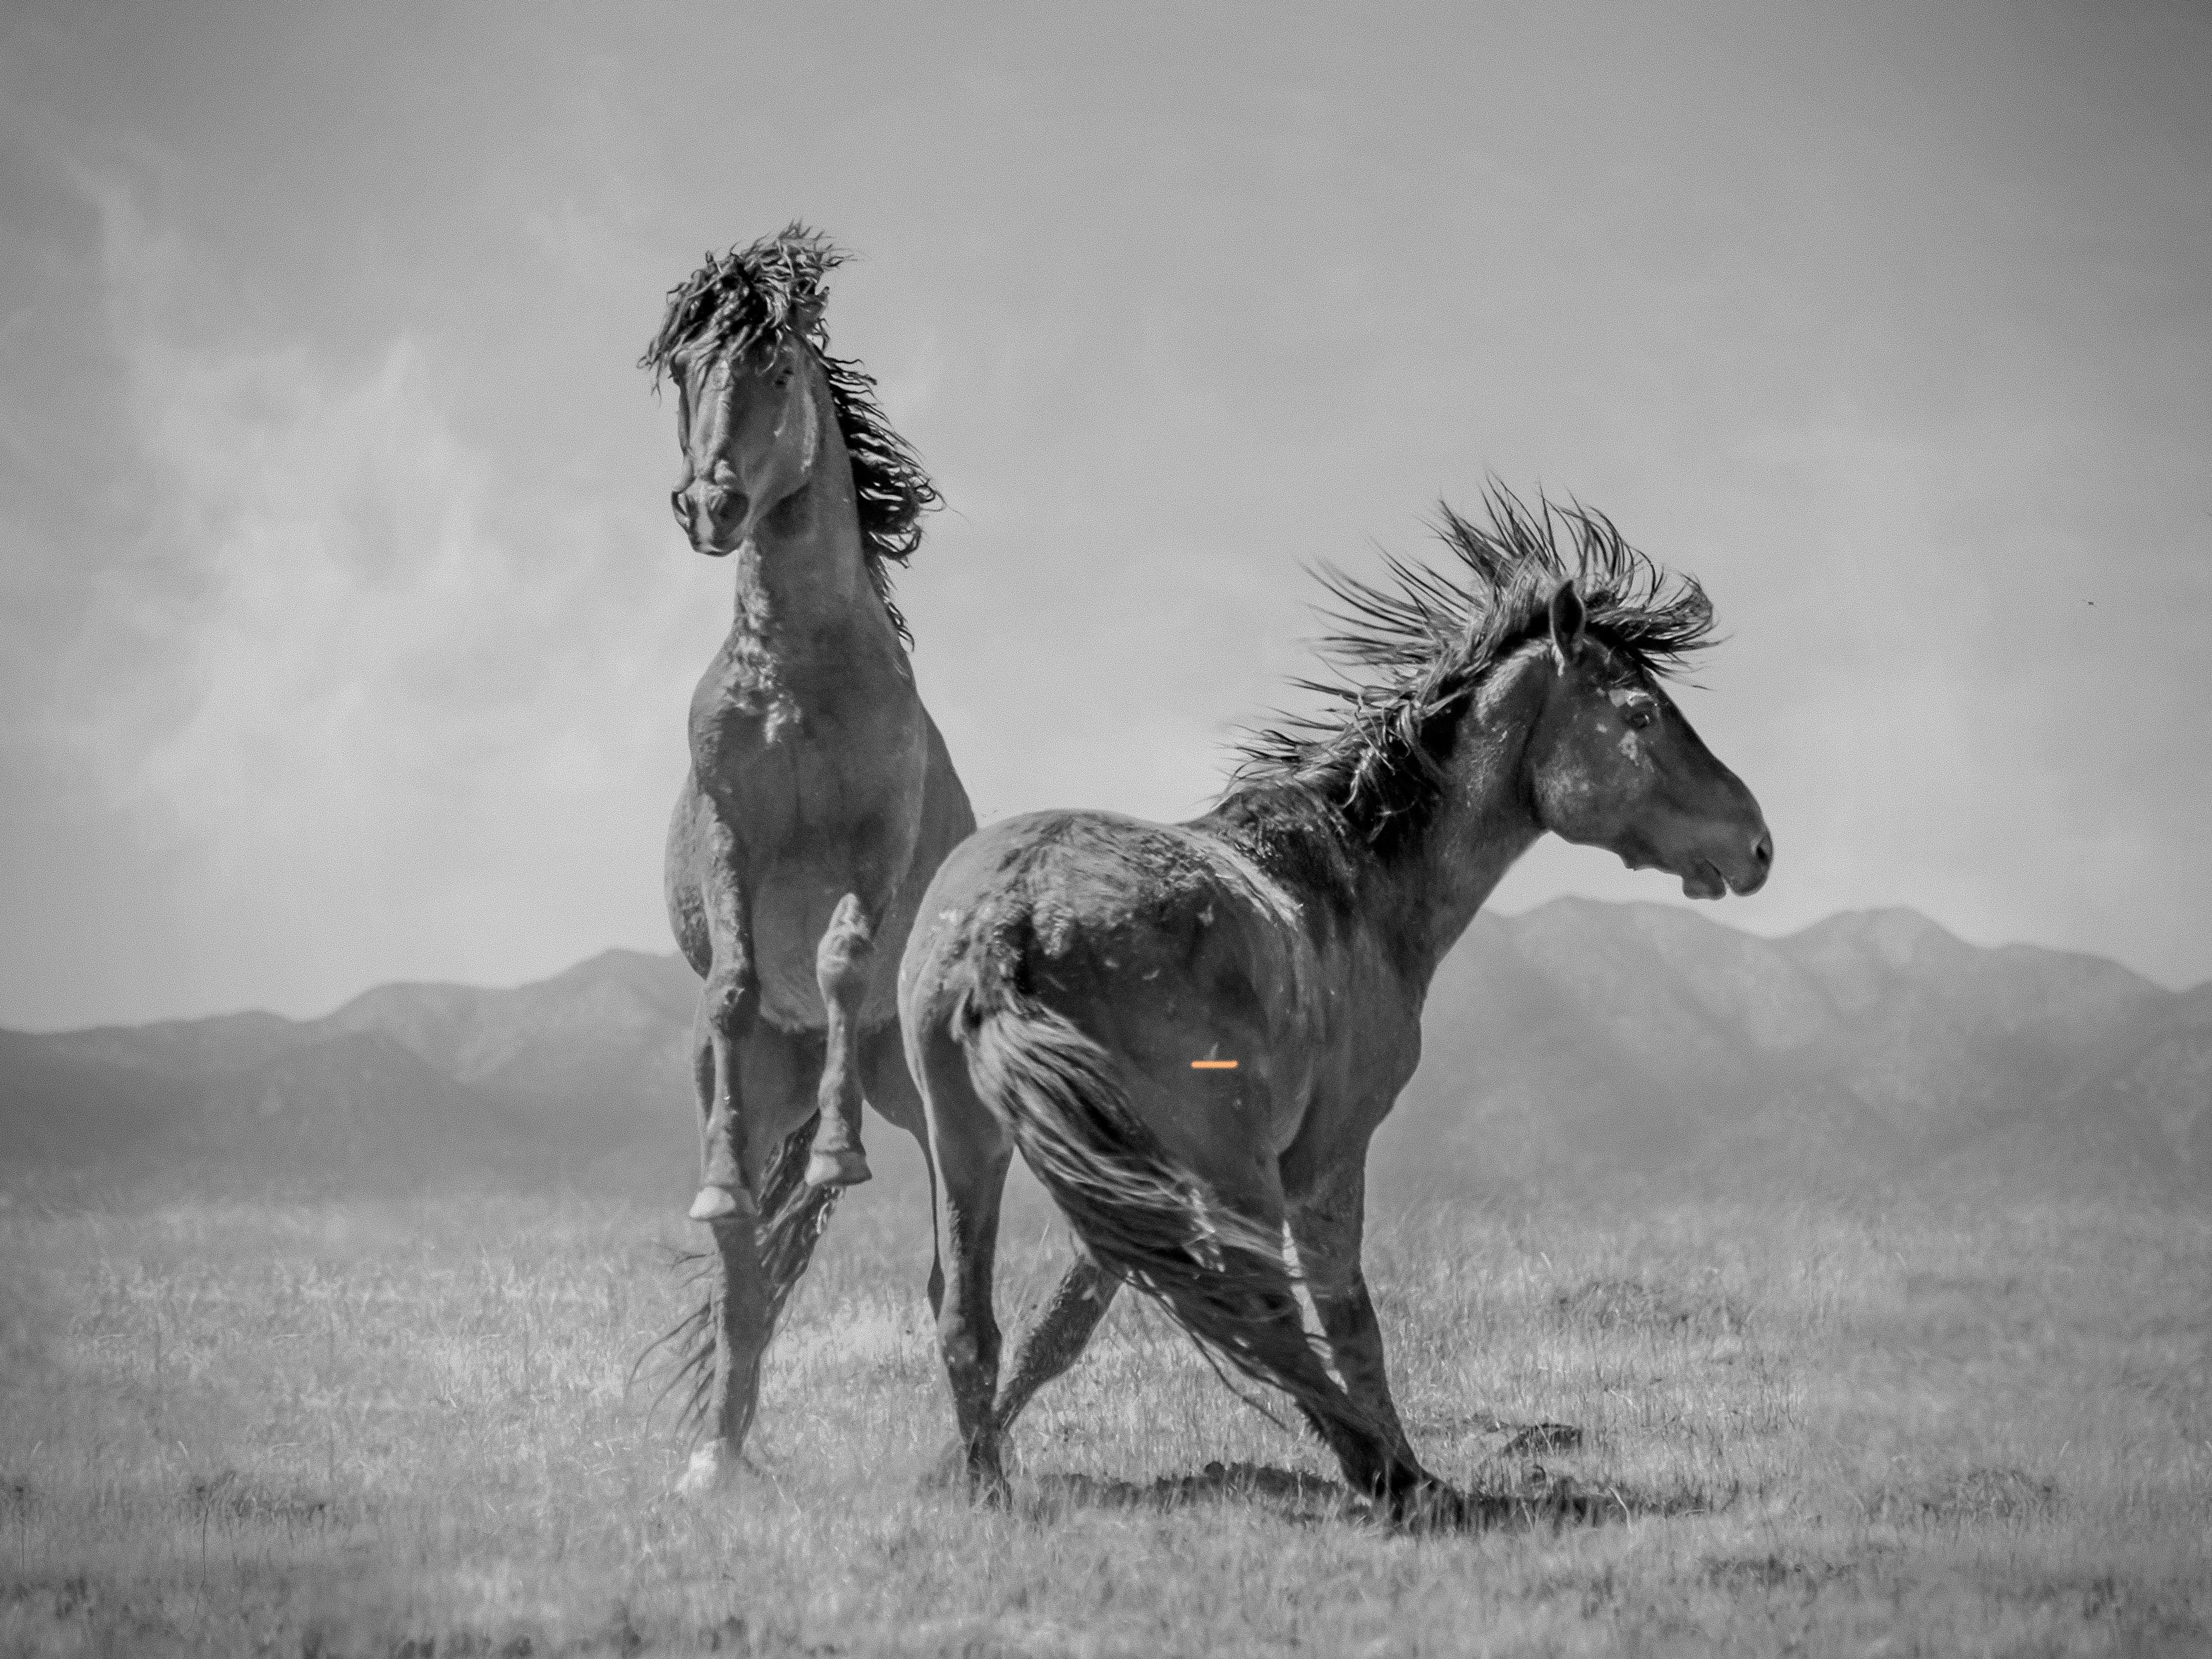 Shane Russeck Animal Print - "Wonder Horses" 36x48 - Black & White Photography, Wild Horses Mustangs Unsigned